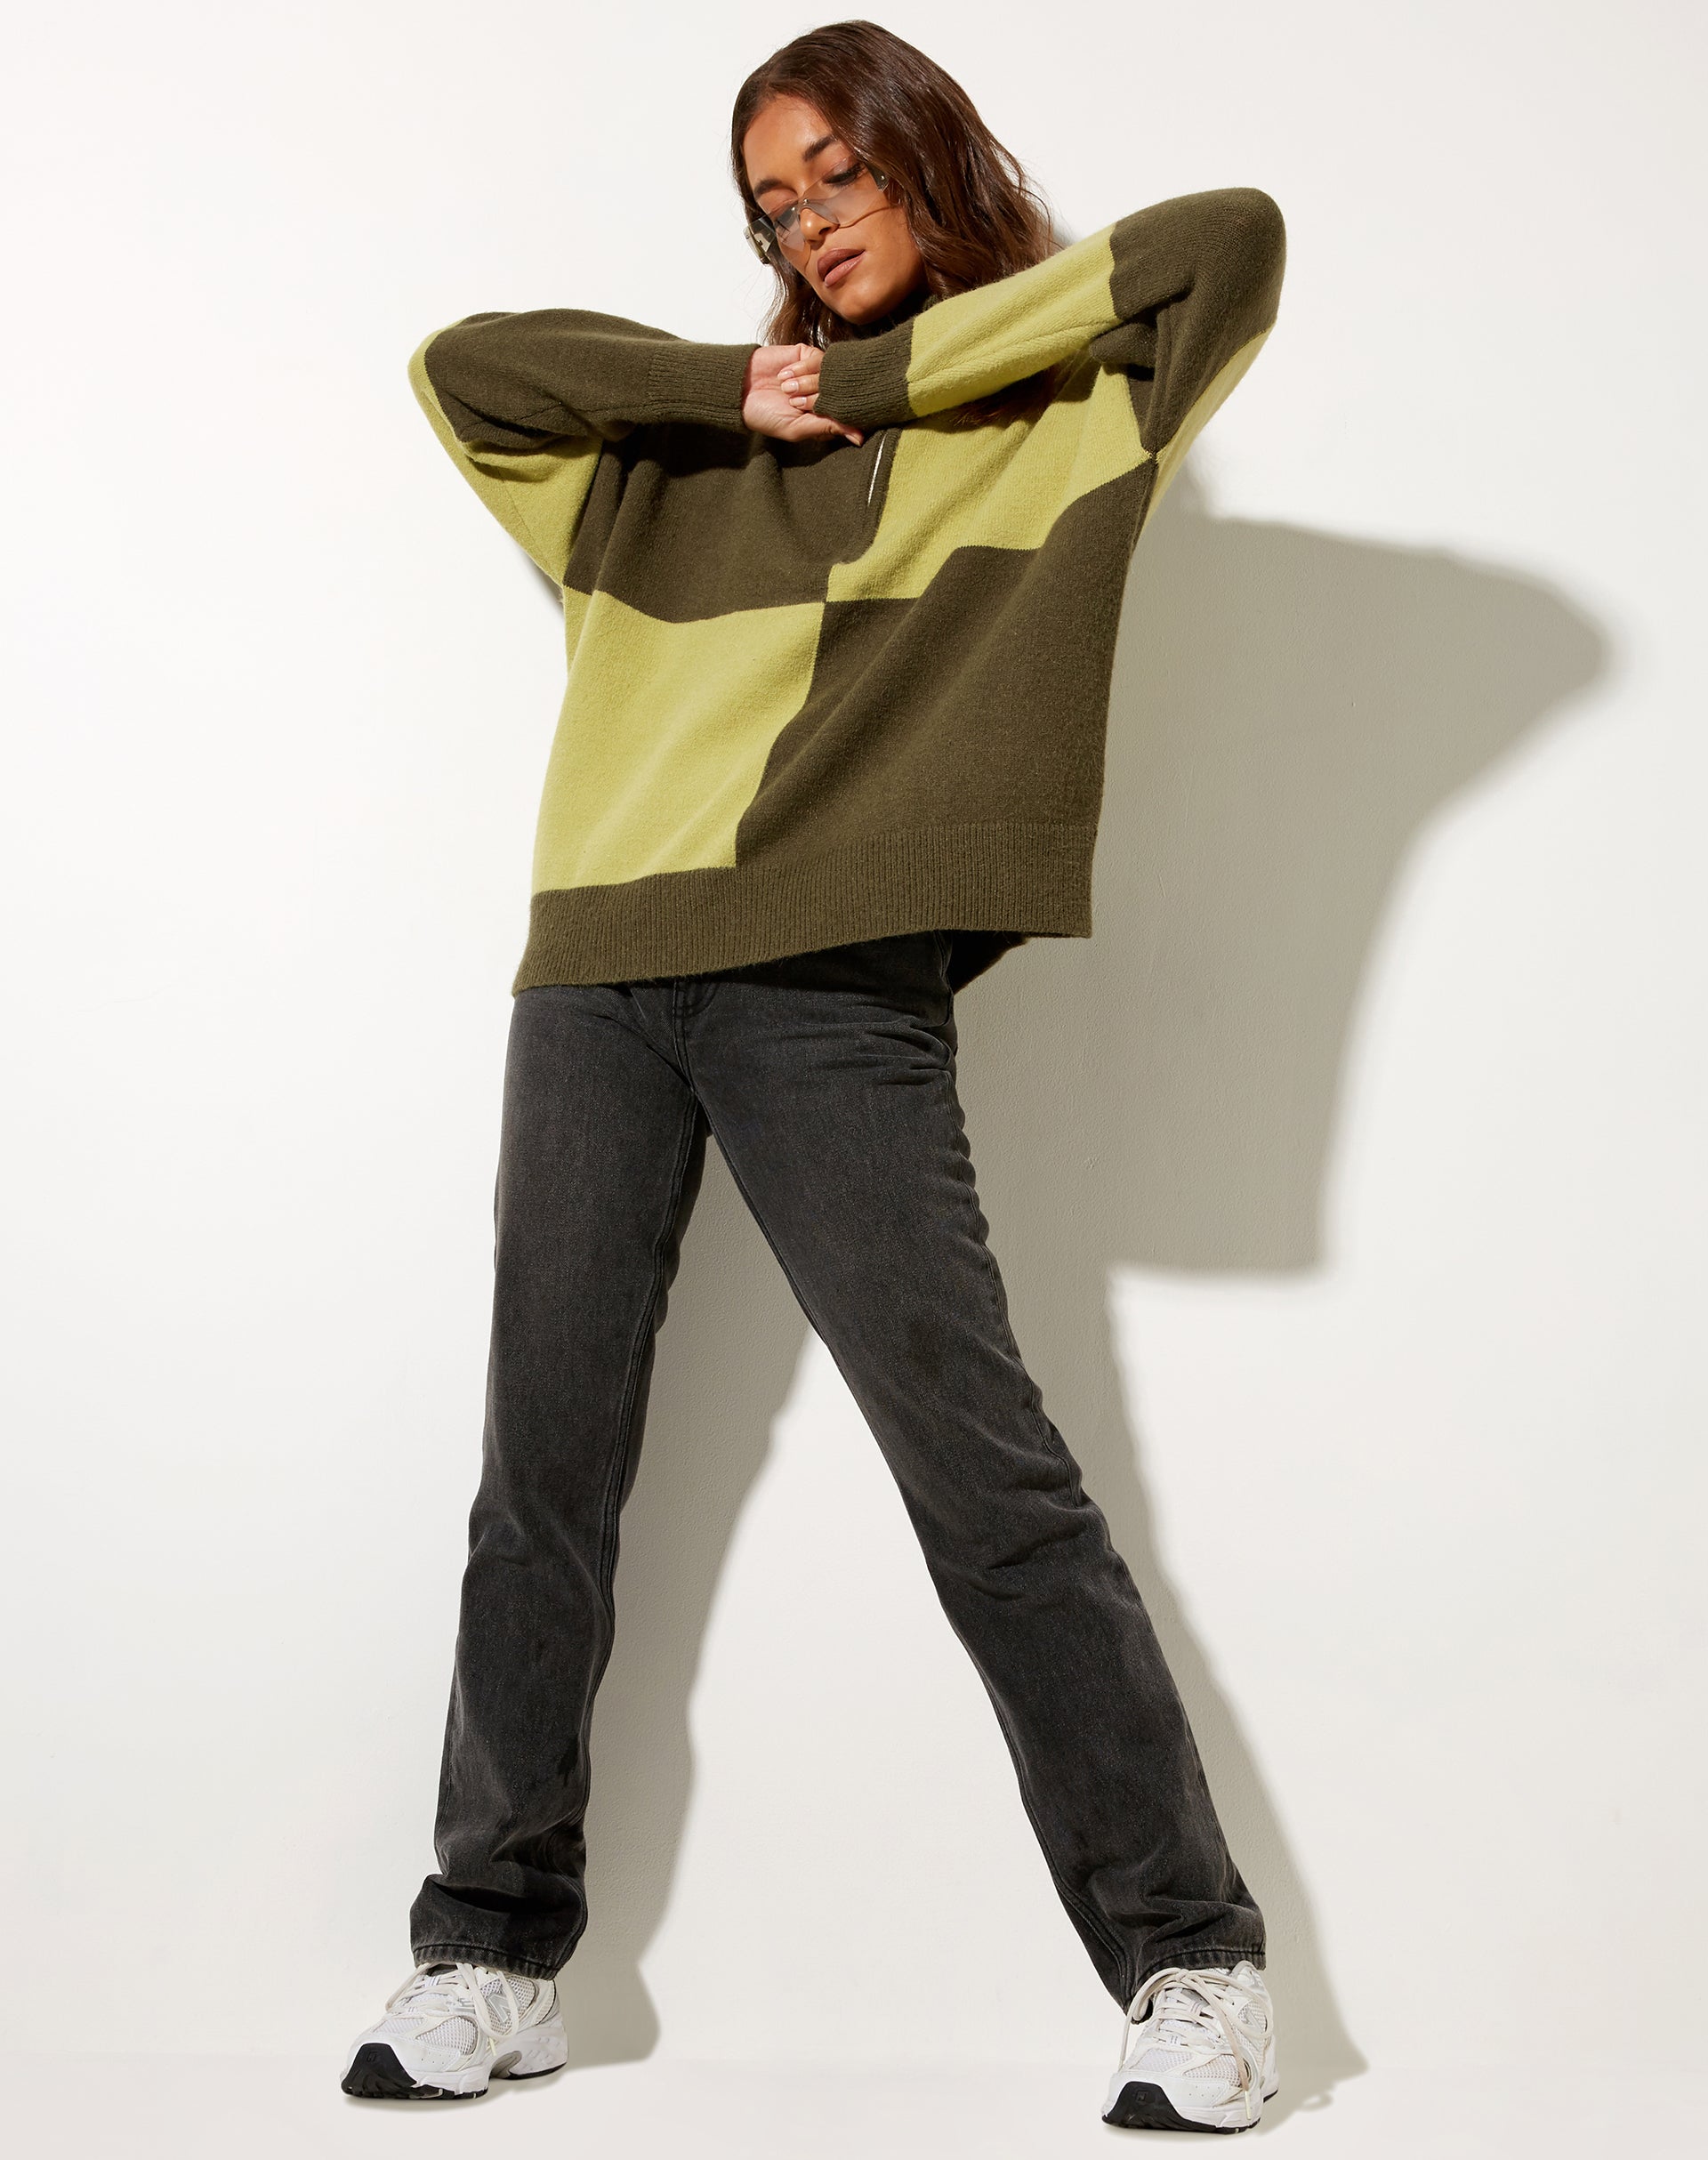 Image of Tusca Sweatshirt in Green